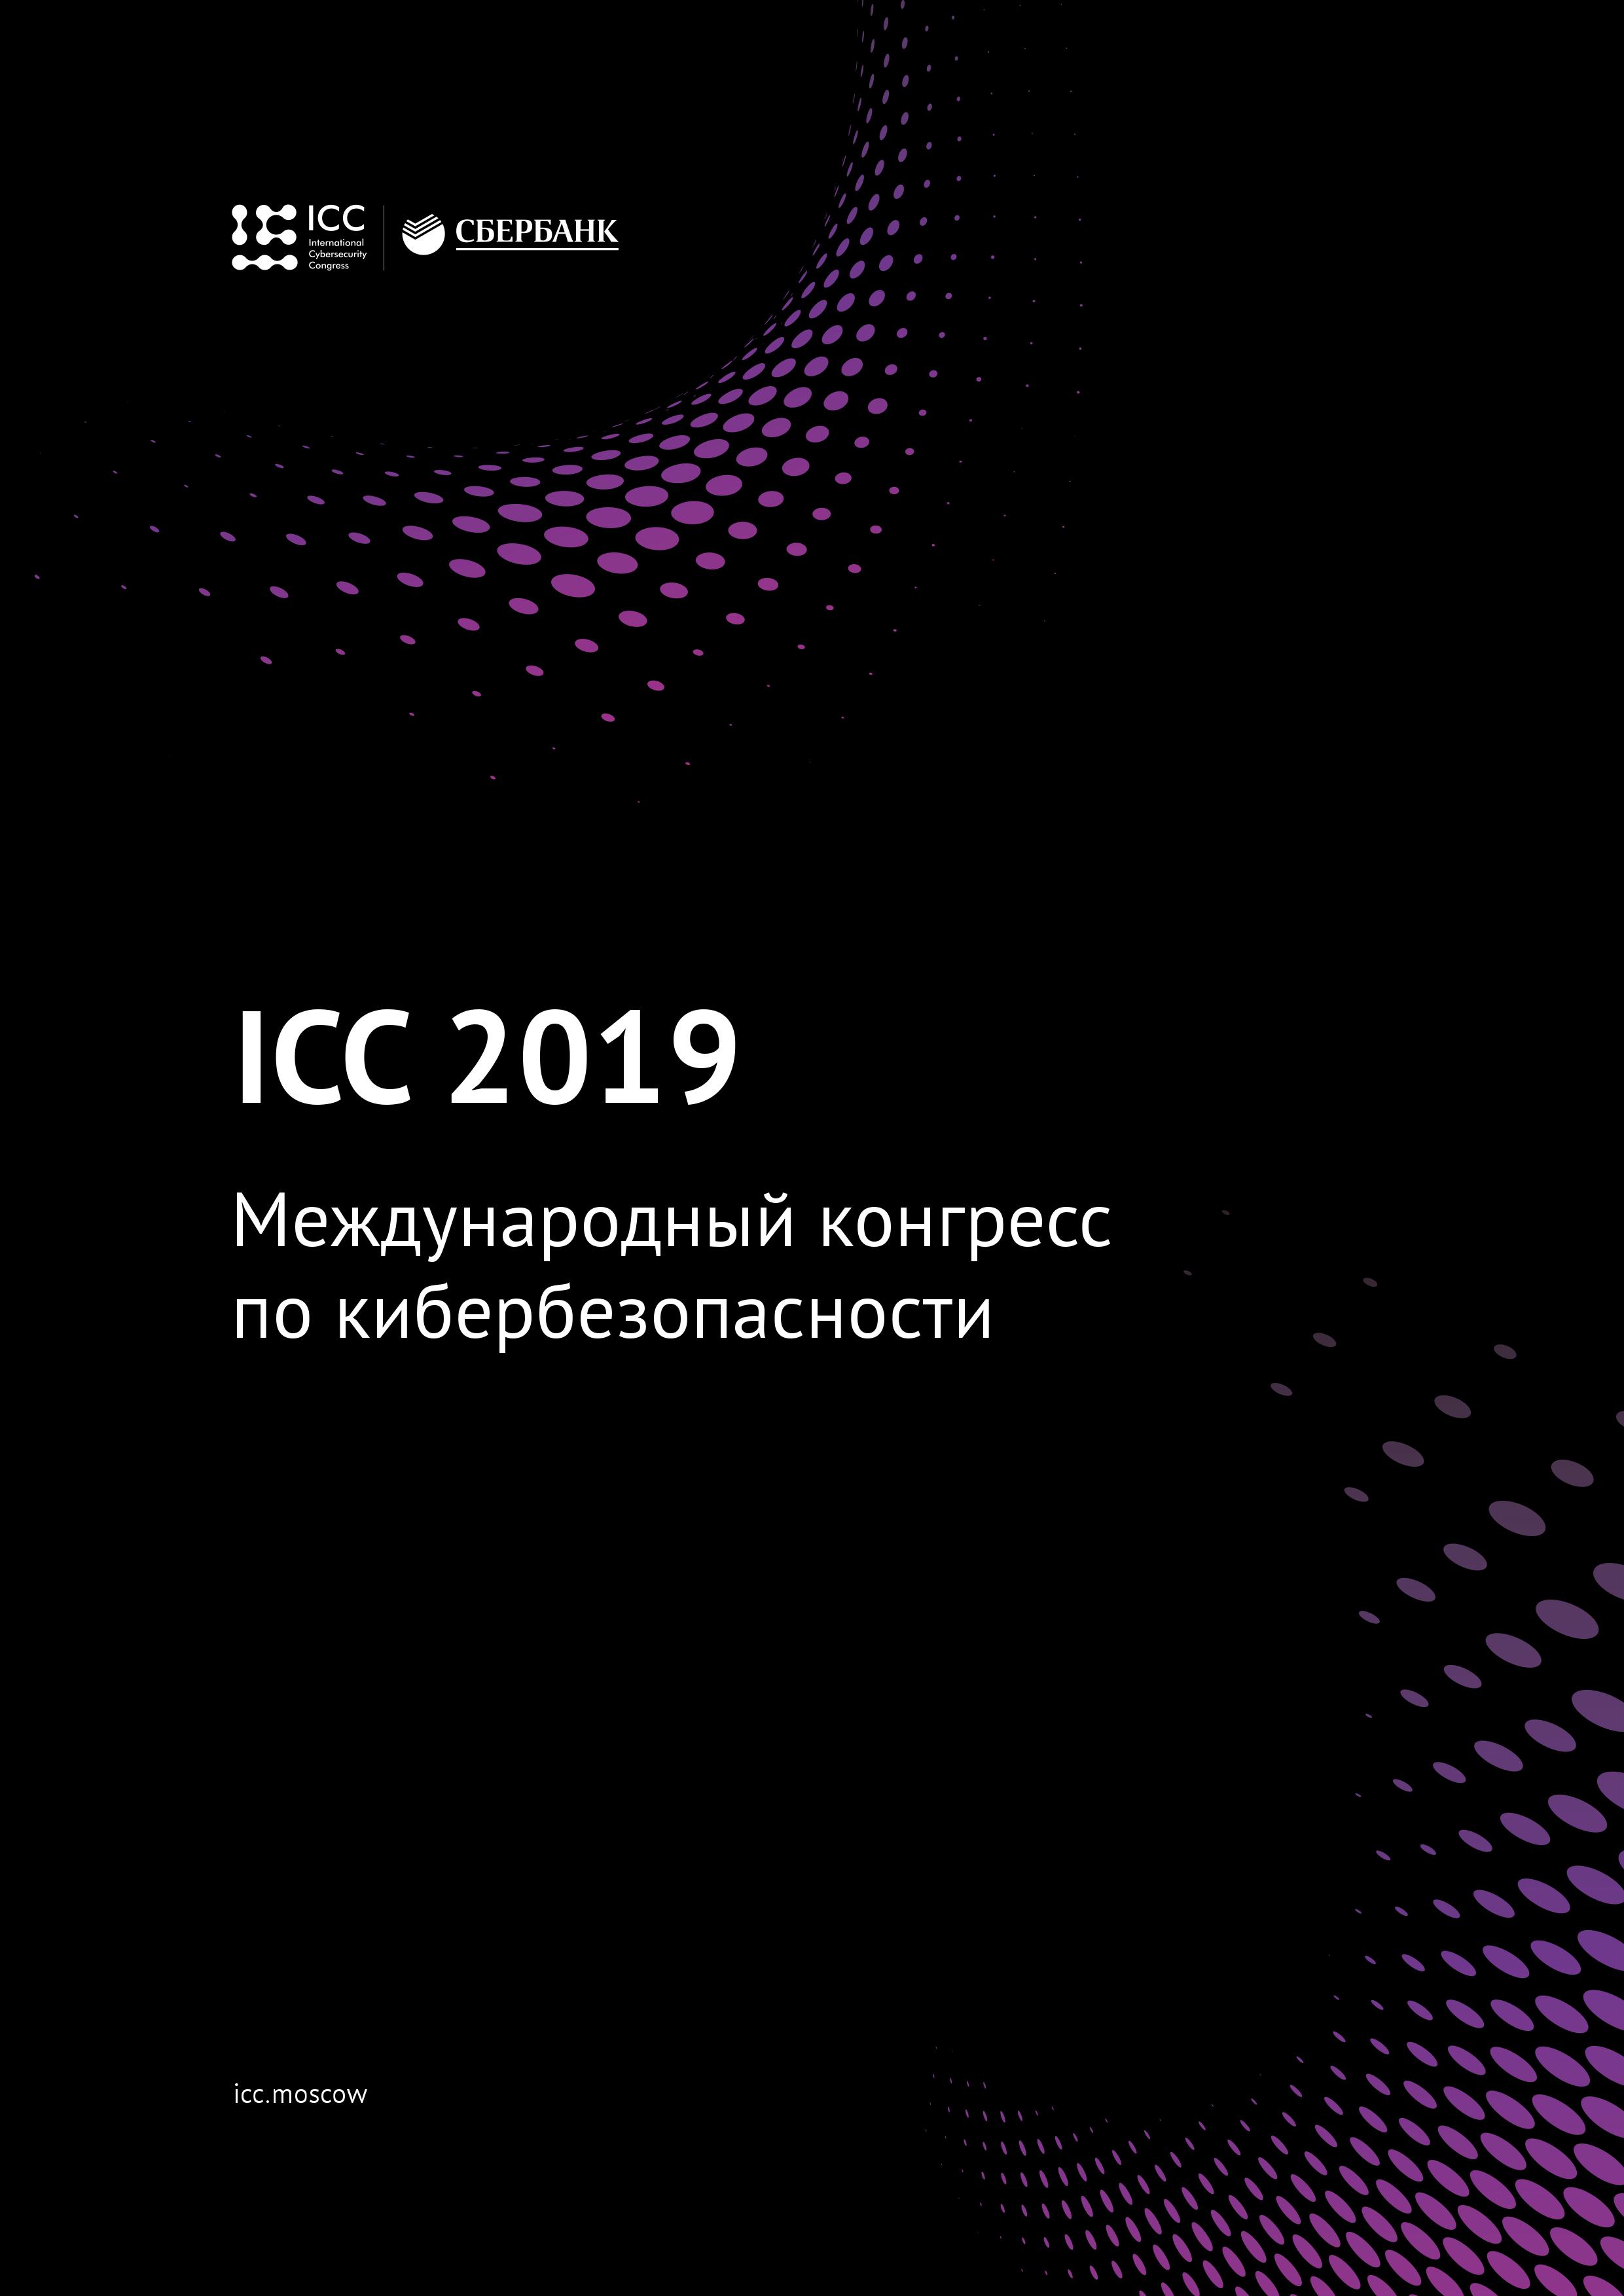 International Cybersecurity Congres